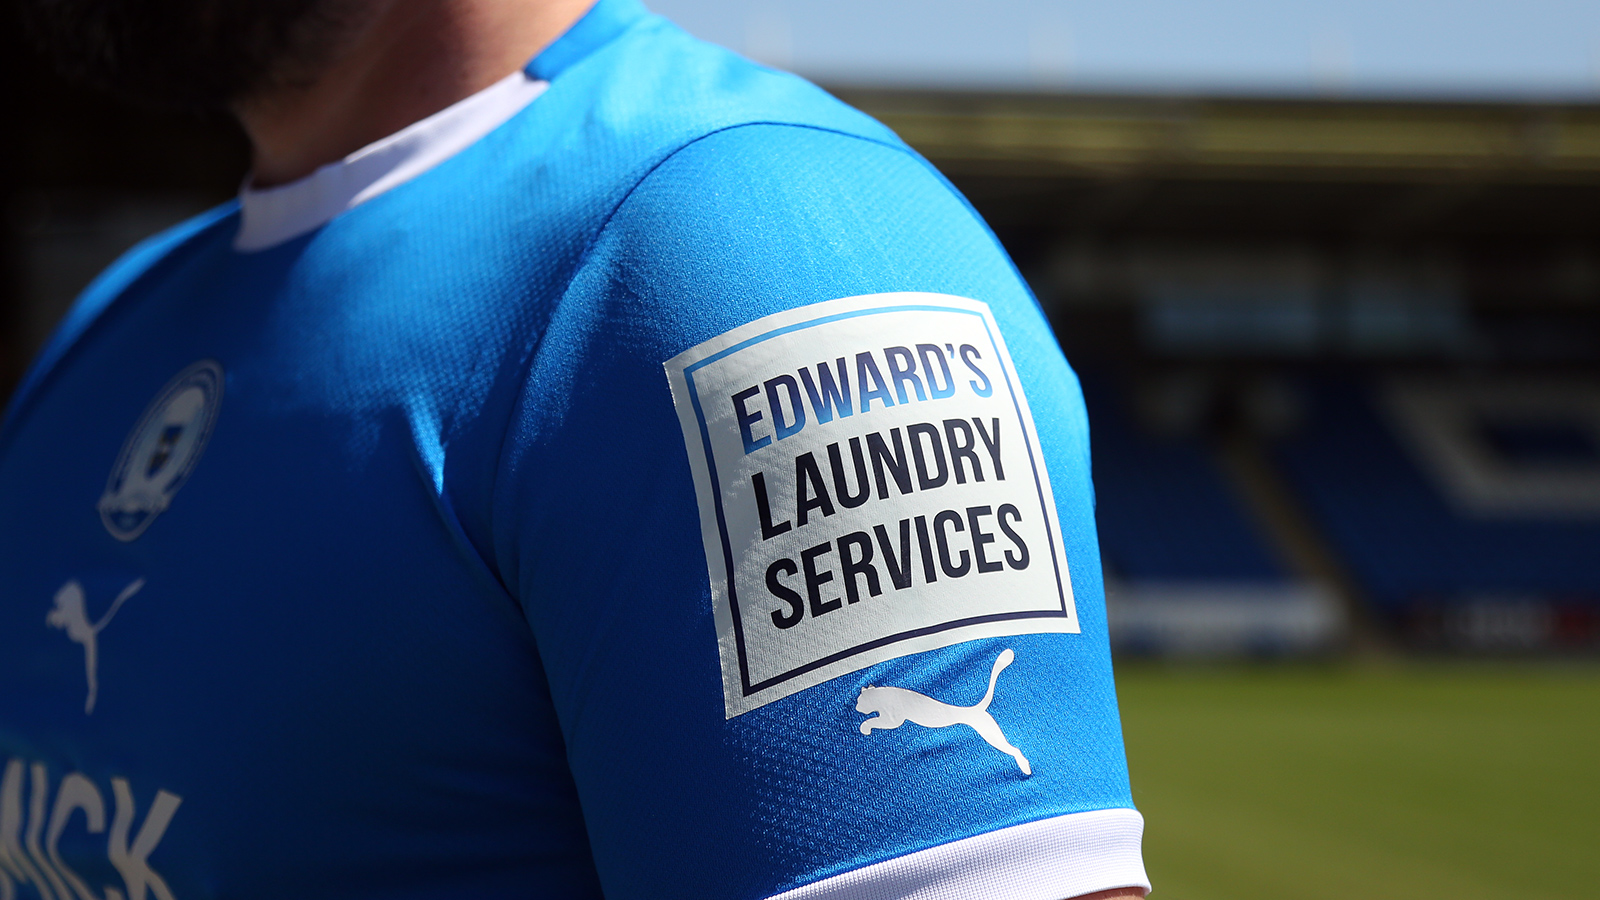 Edward's Laundry Services